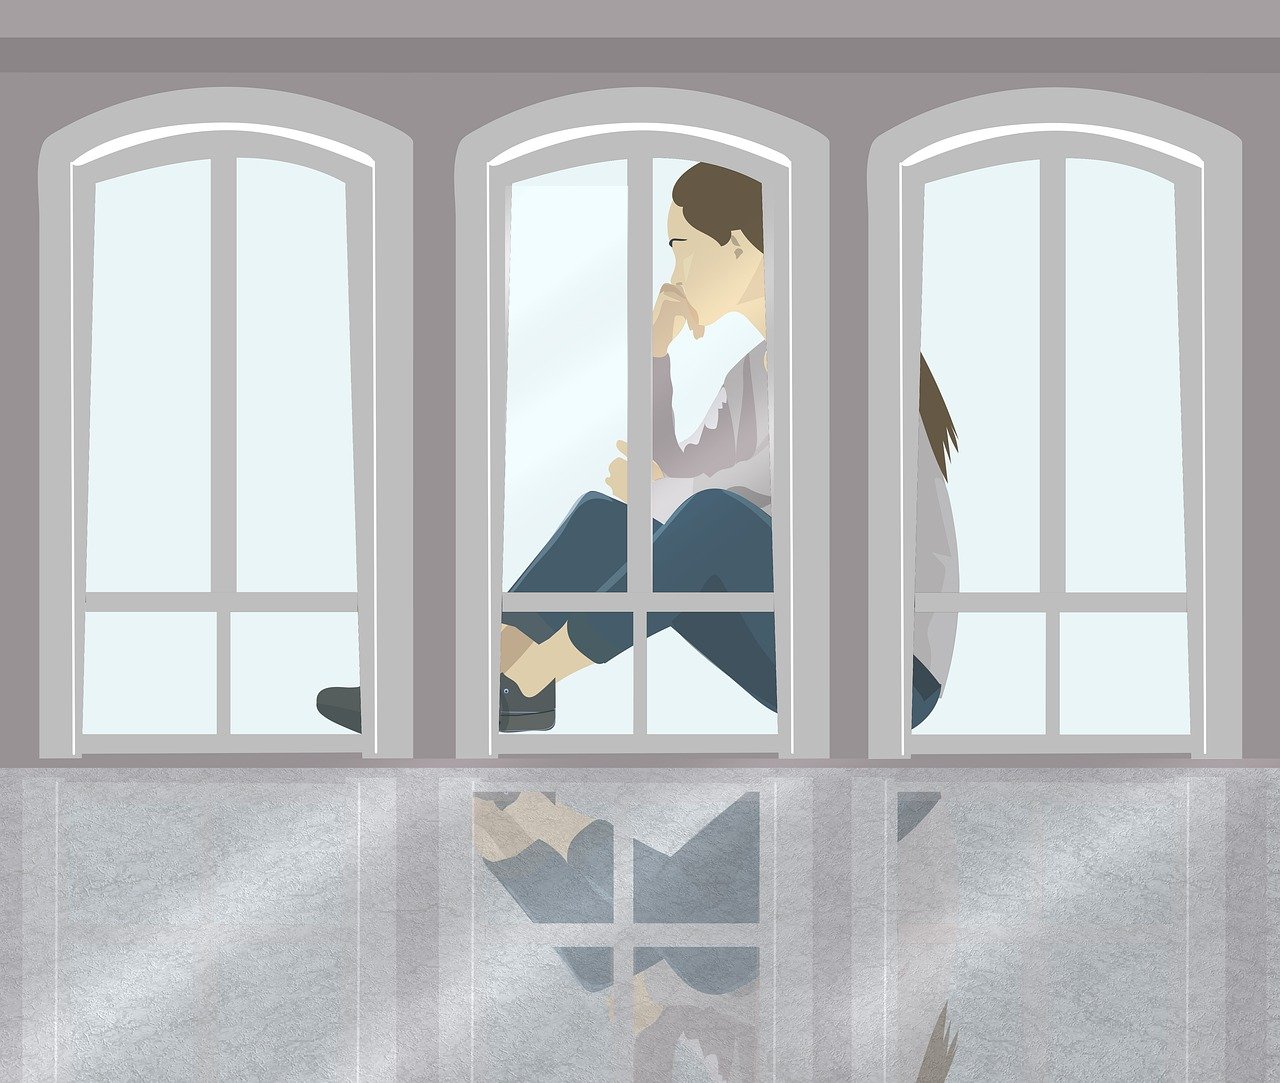 Depression / Frau traurig hinter einem Fenster sitzend